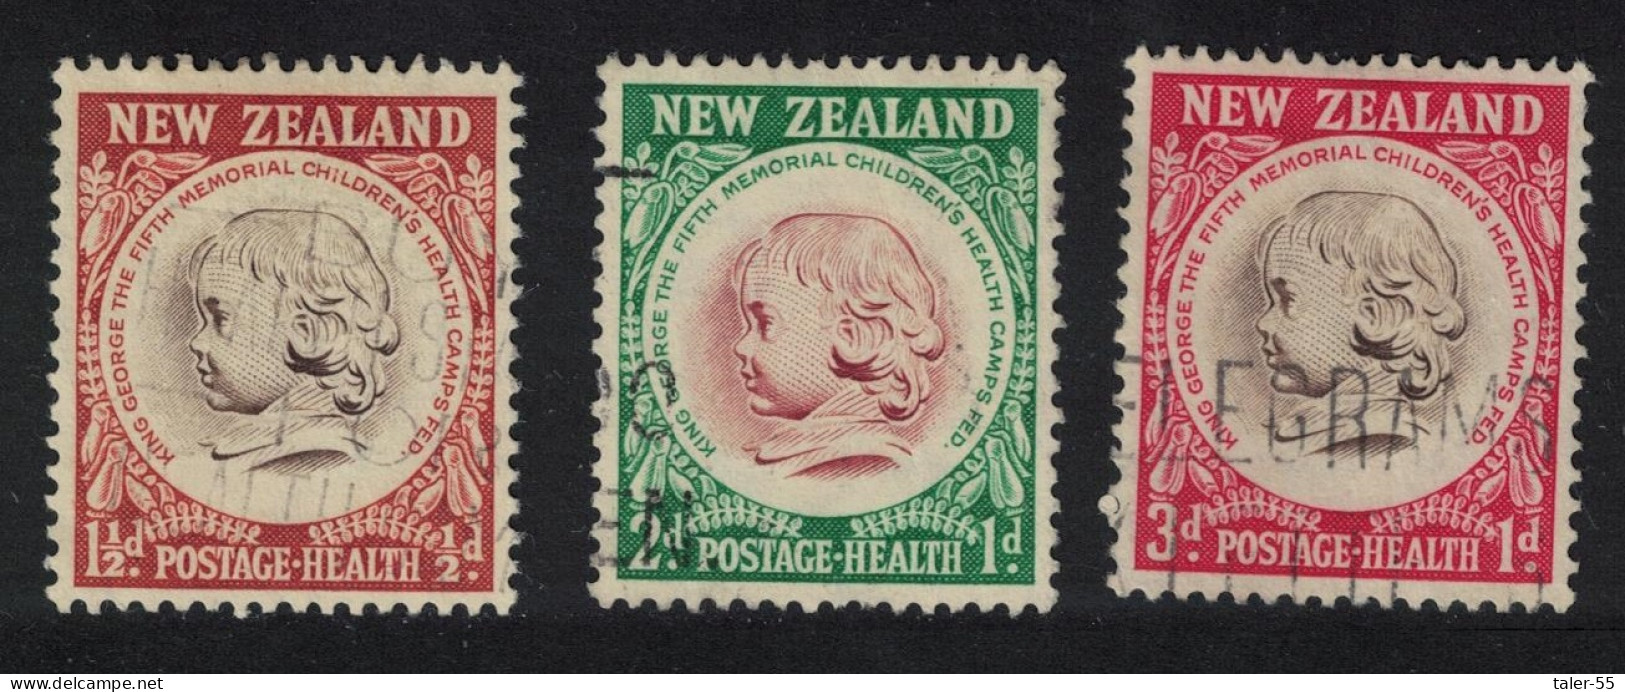 New Zealand Health Camps Federation Emblem 3v 1955 Canc SG#742-744 - Used Stamps